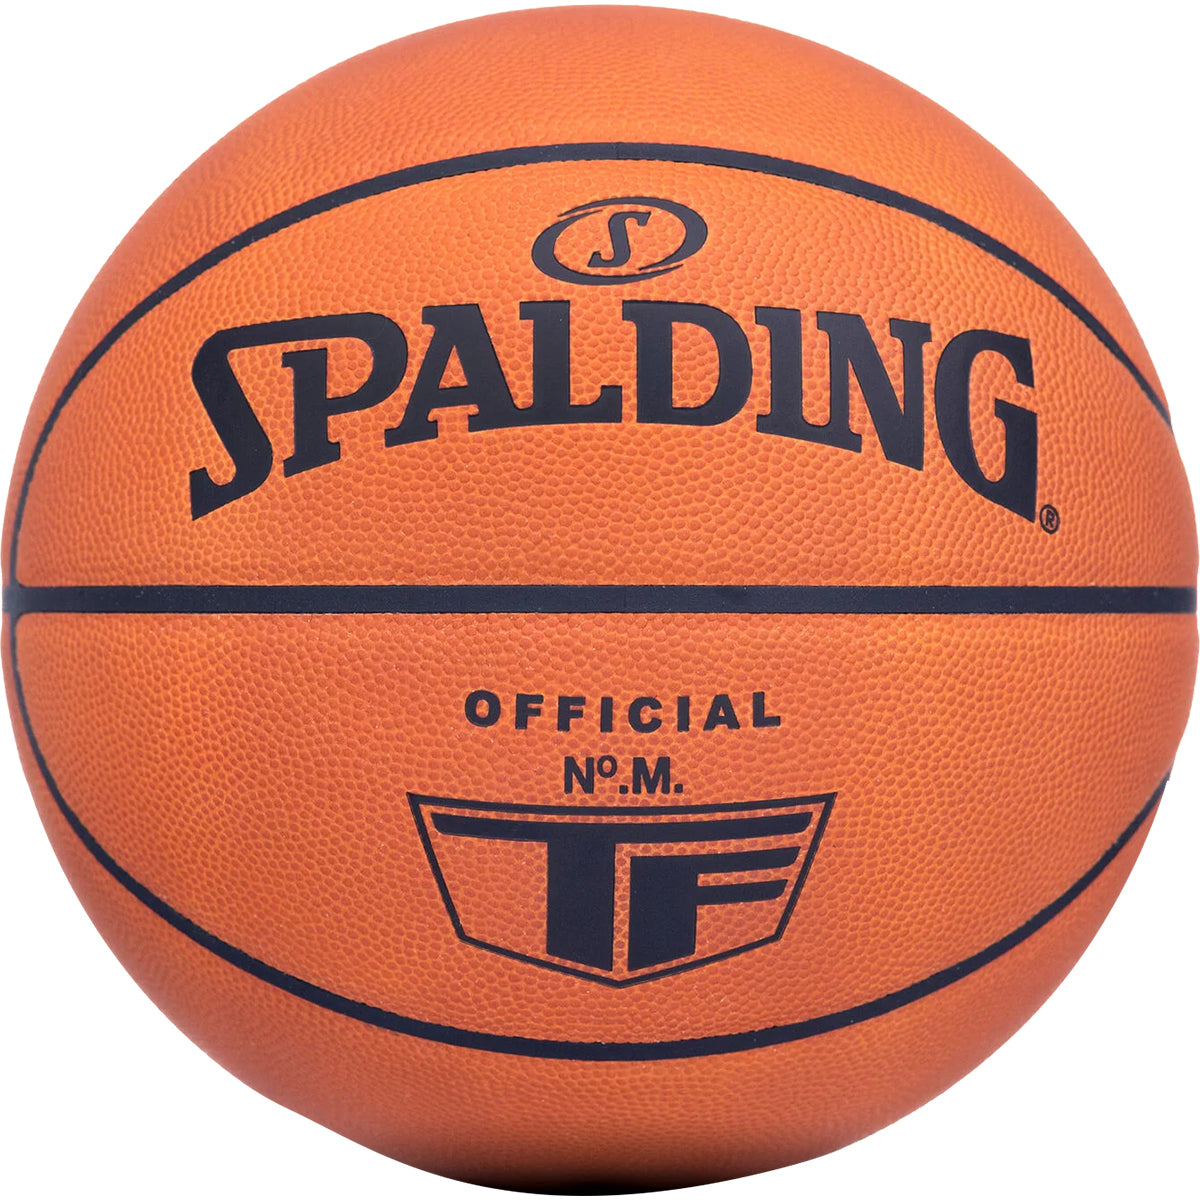 Spalding TF Model M Official Leather Indoor Game Basketball Spalding